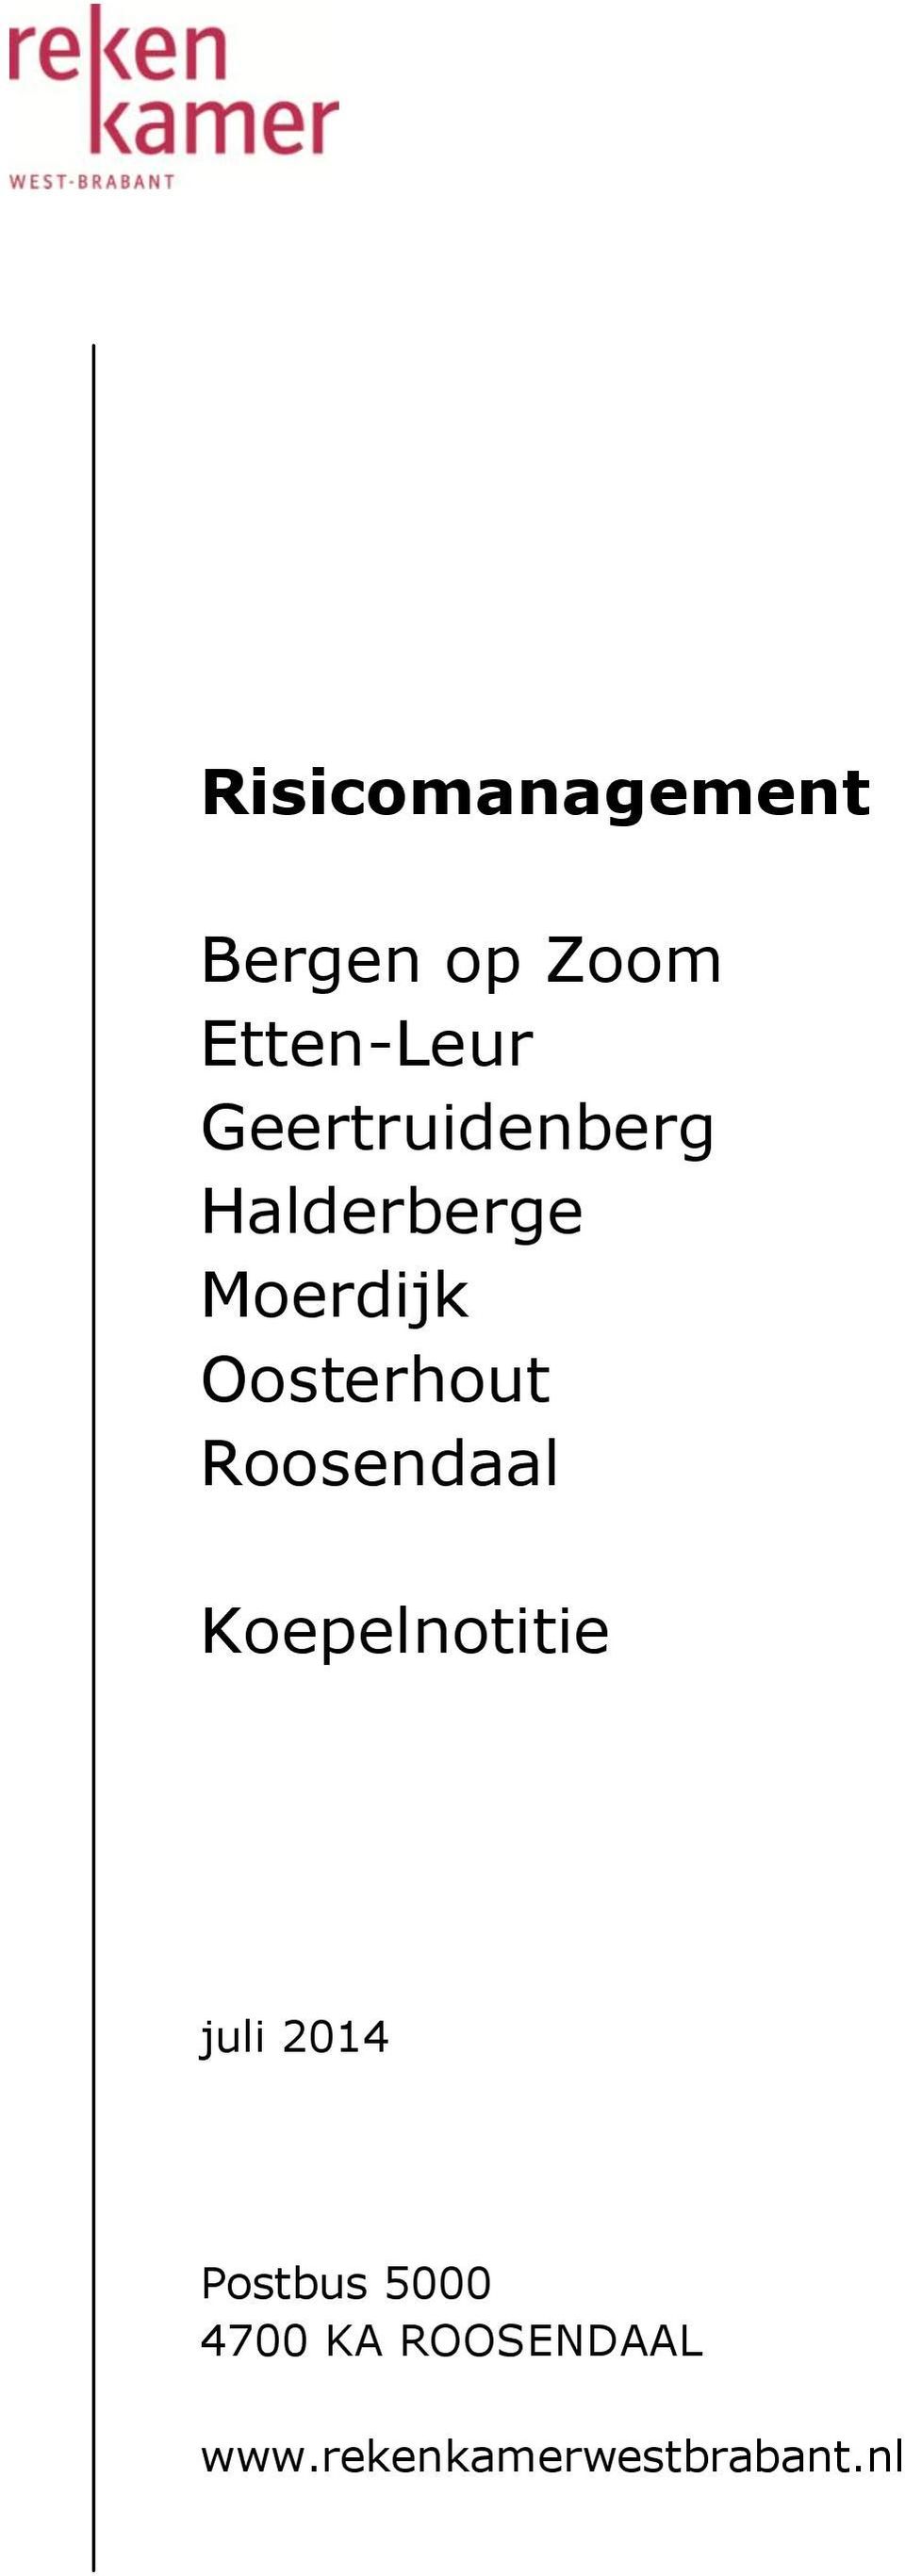 Oosterhout Roosendaal Koepelnotitie juli 2014